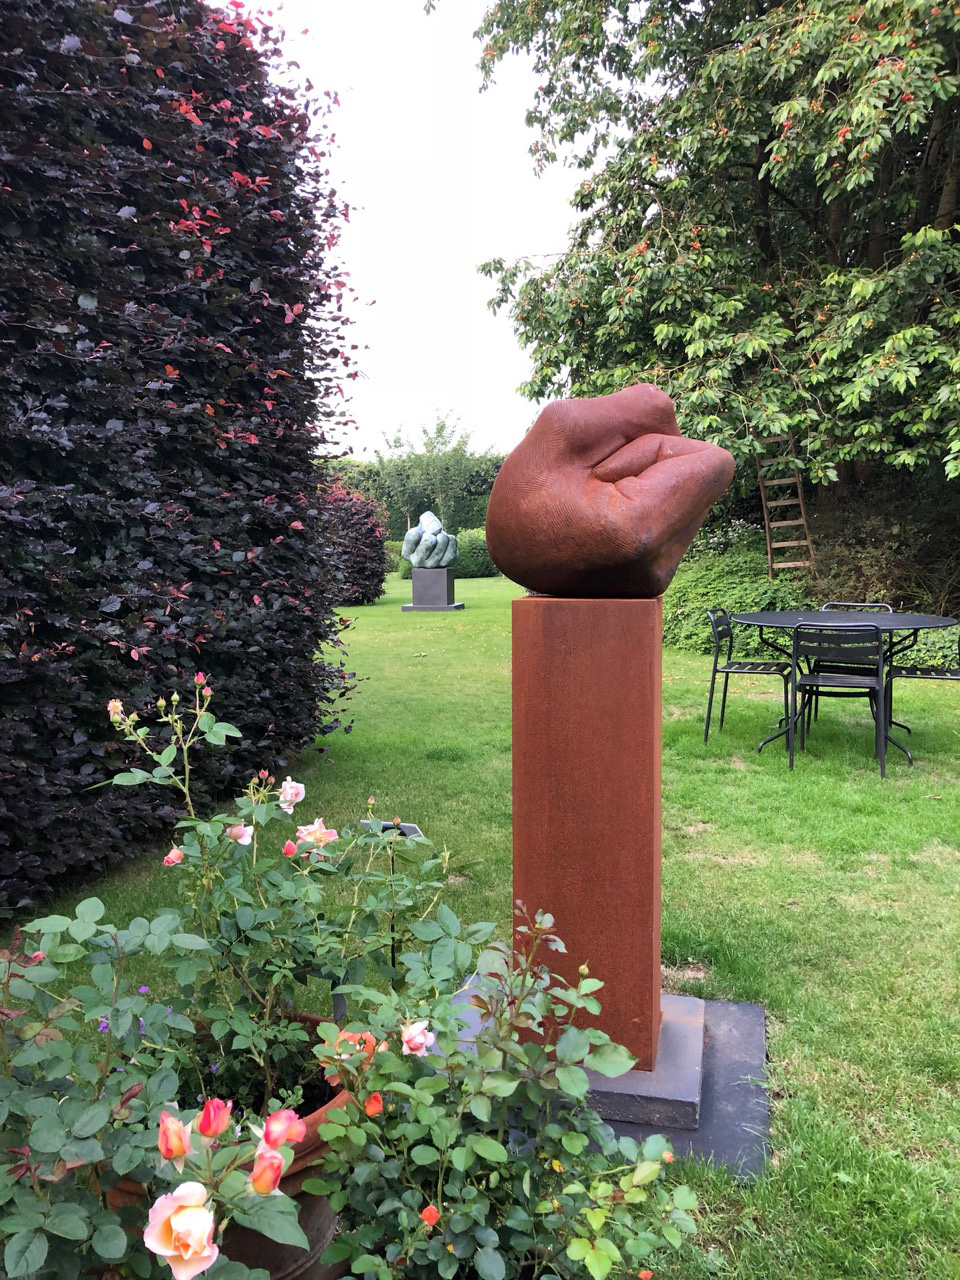 View of sculptor Etienne Desmet's exhibition in the Ooidonk gallery garden.